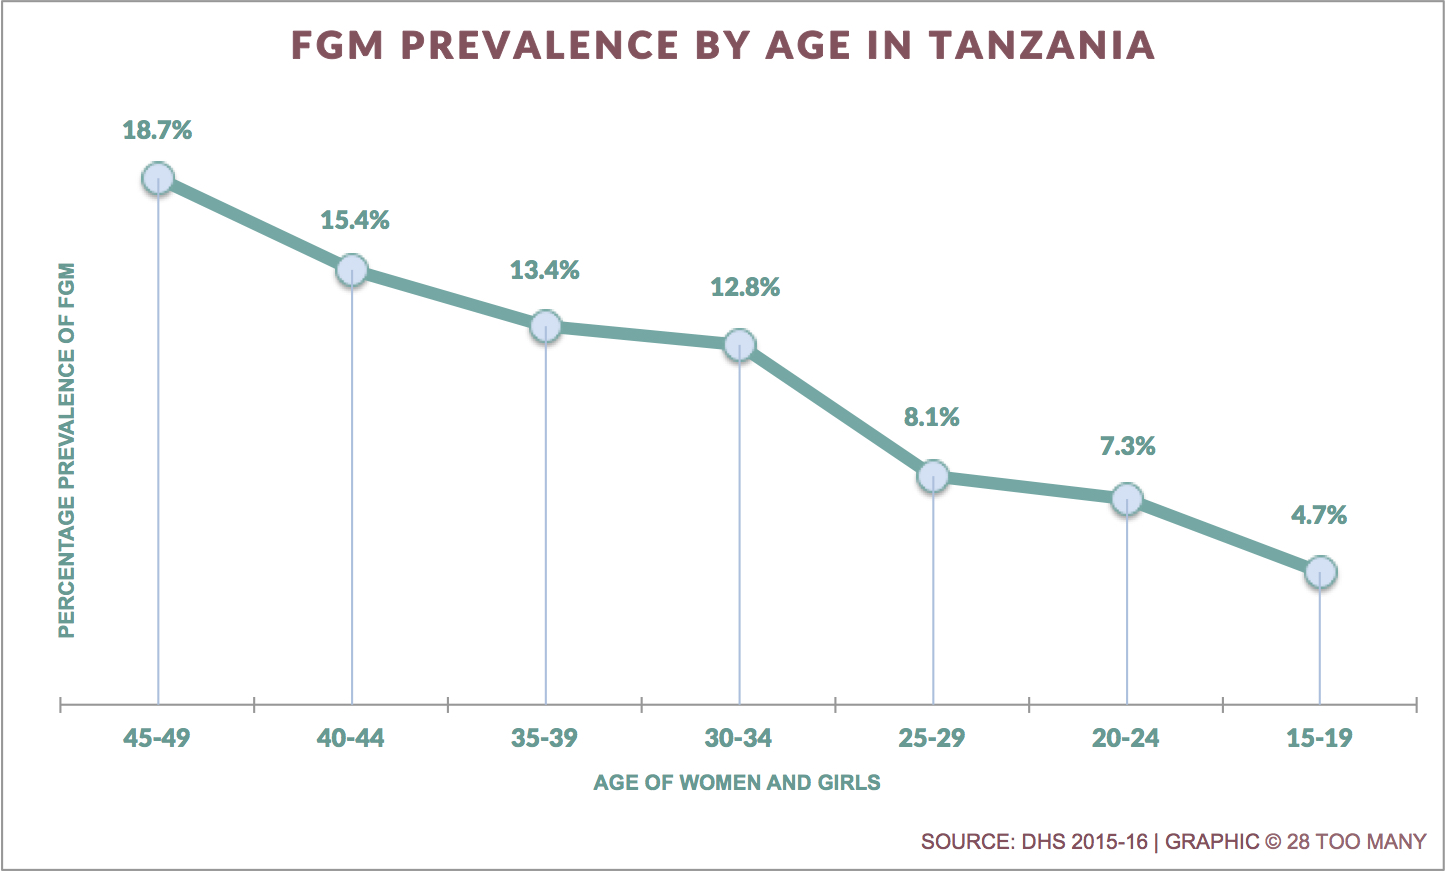 Trends in FGM Prevalence in Tanzania